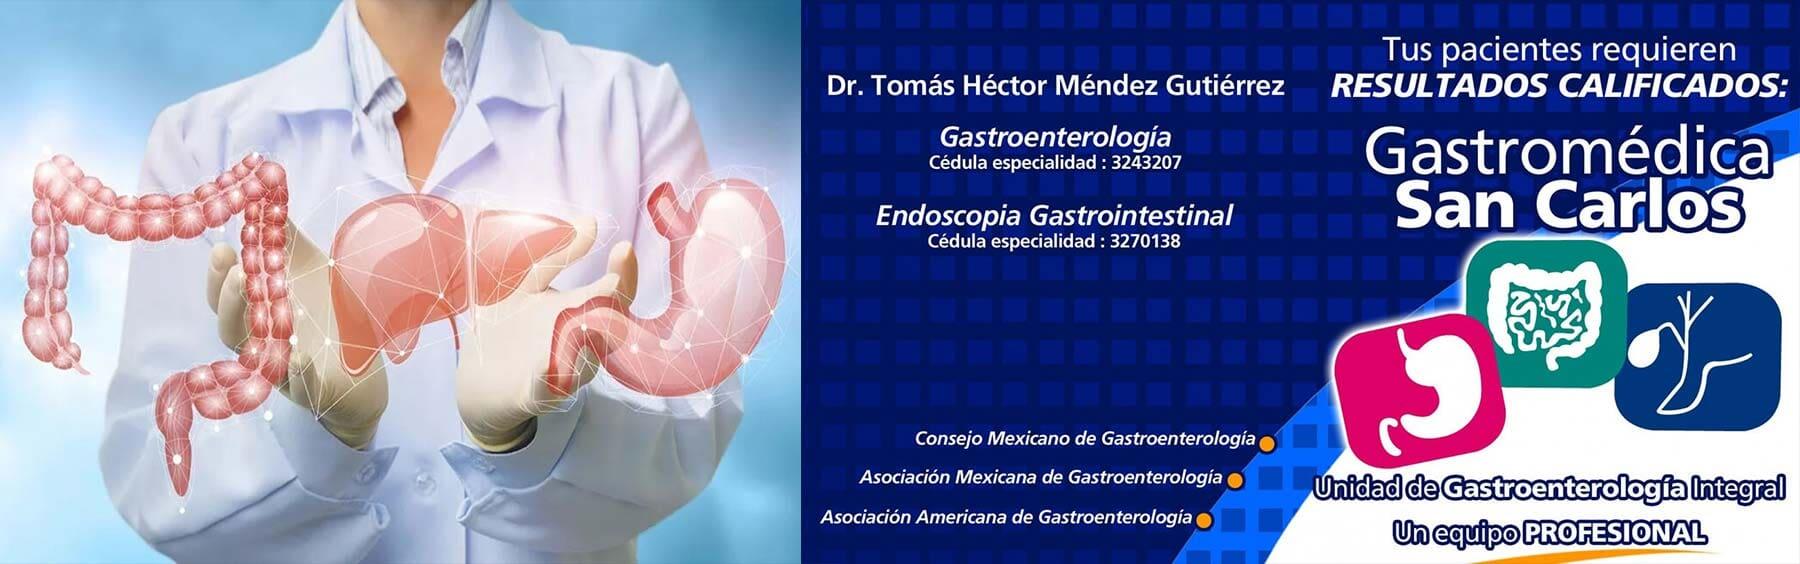 DR. TOMAS H. MÉNDEZ GUTIÉRREZ - RESULTADOS CALIFICADOS